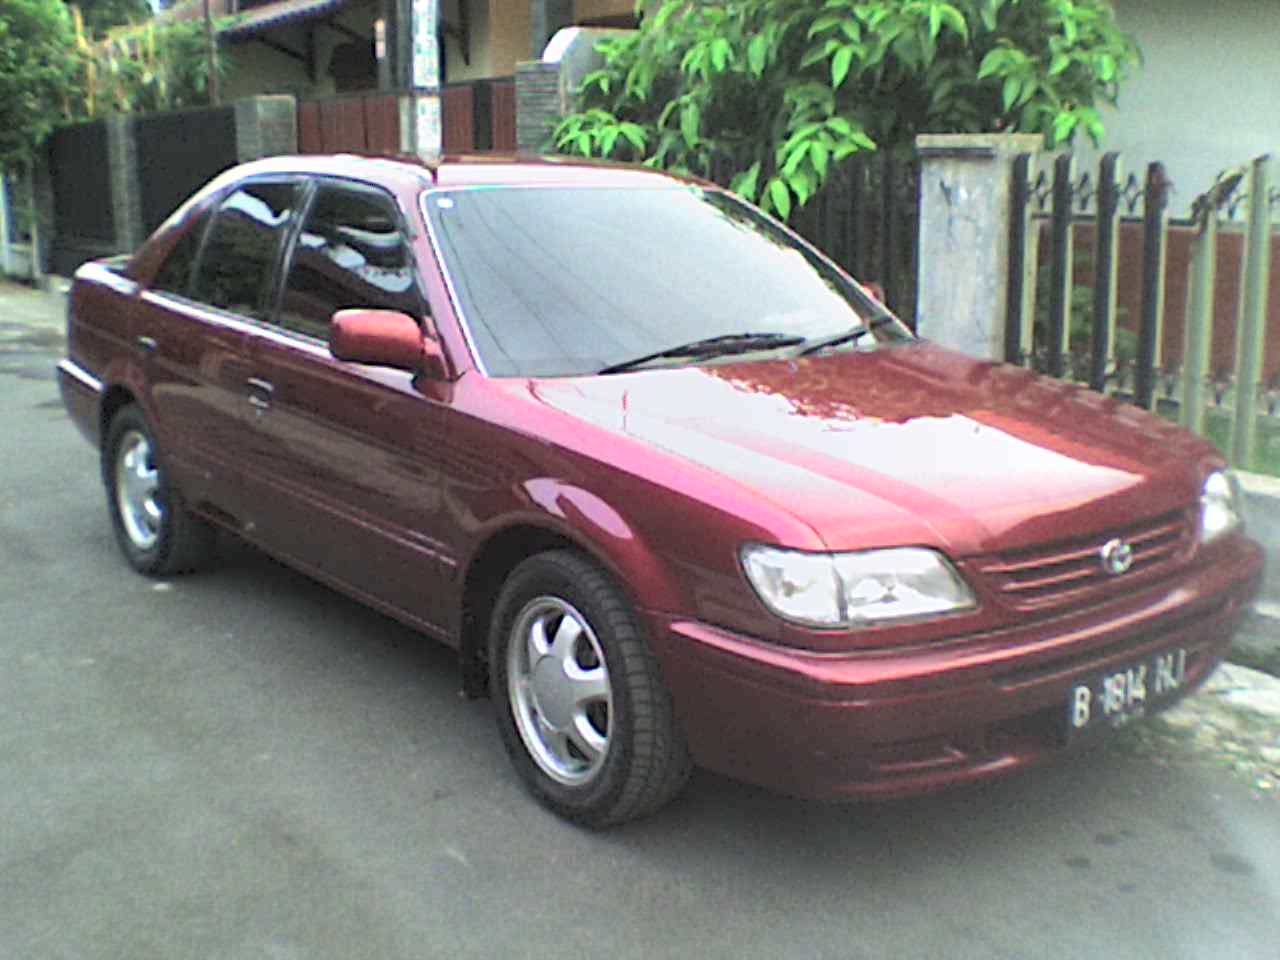 Foto Mobil Toyota Soluna 2000 Merah Maroon Blog Faqih M Arif